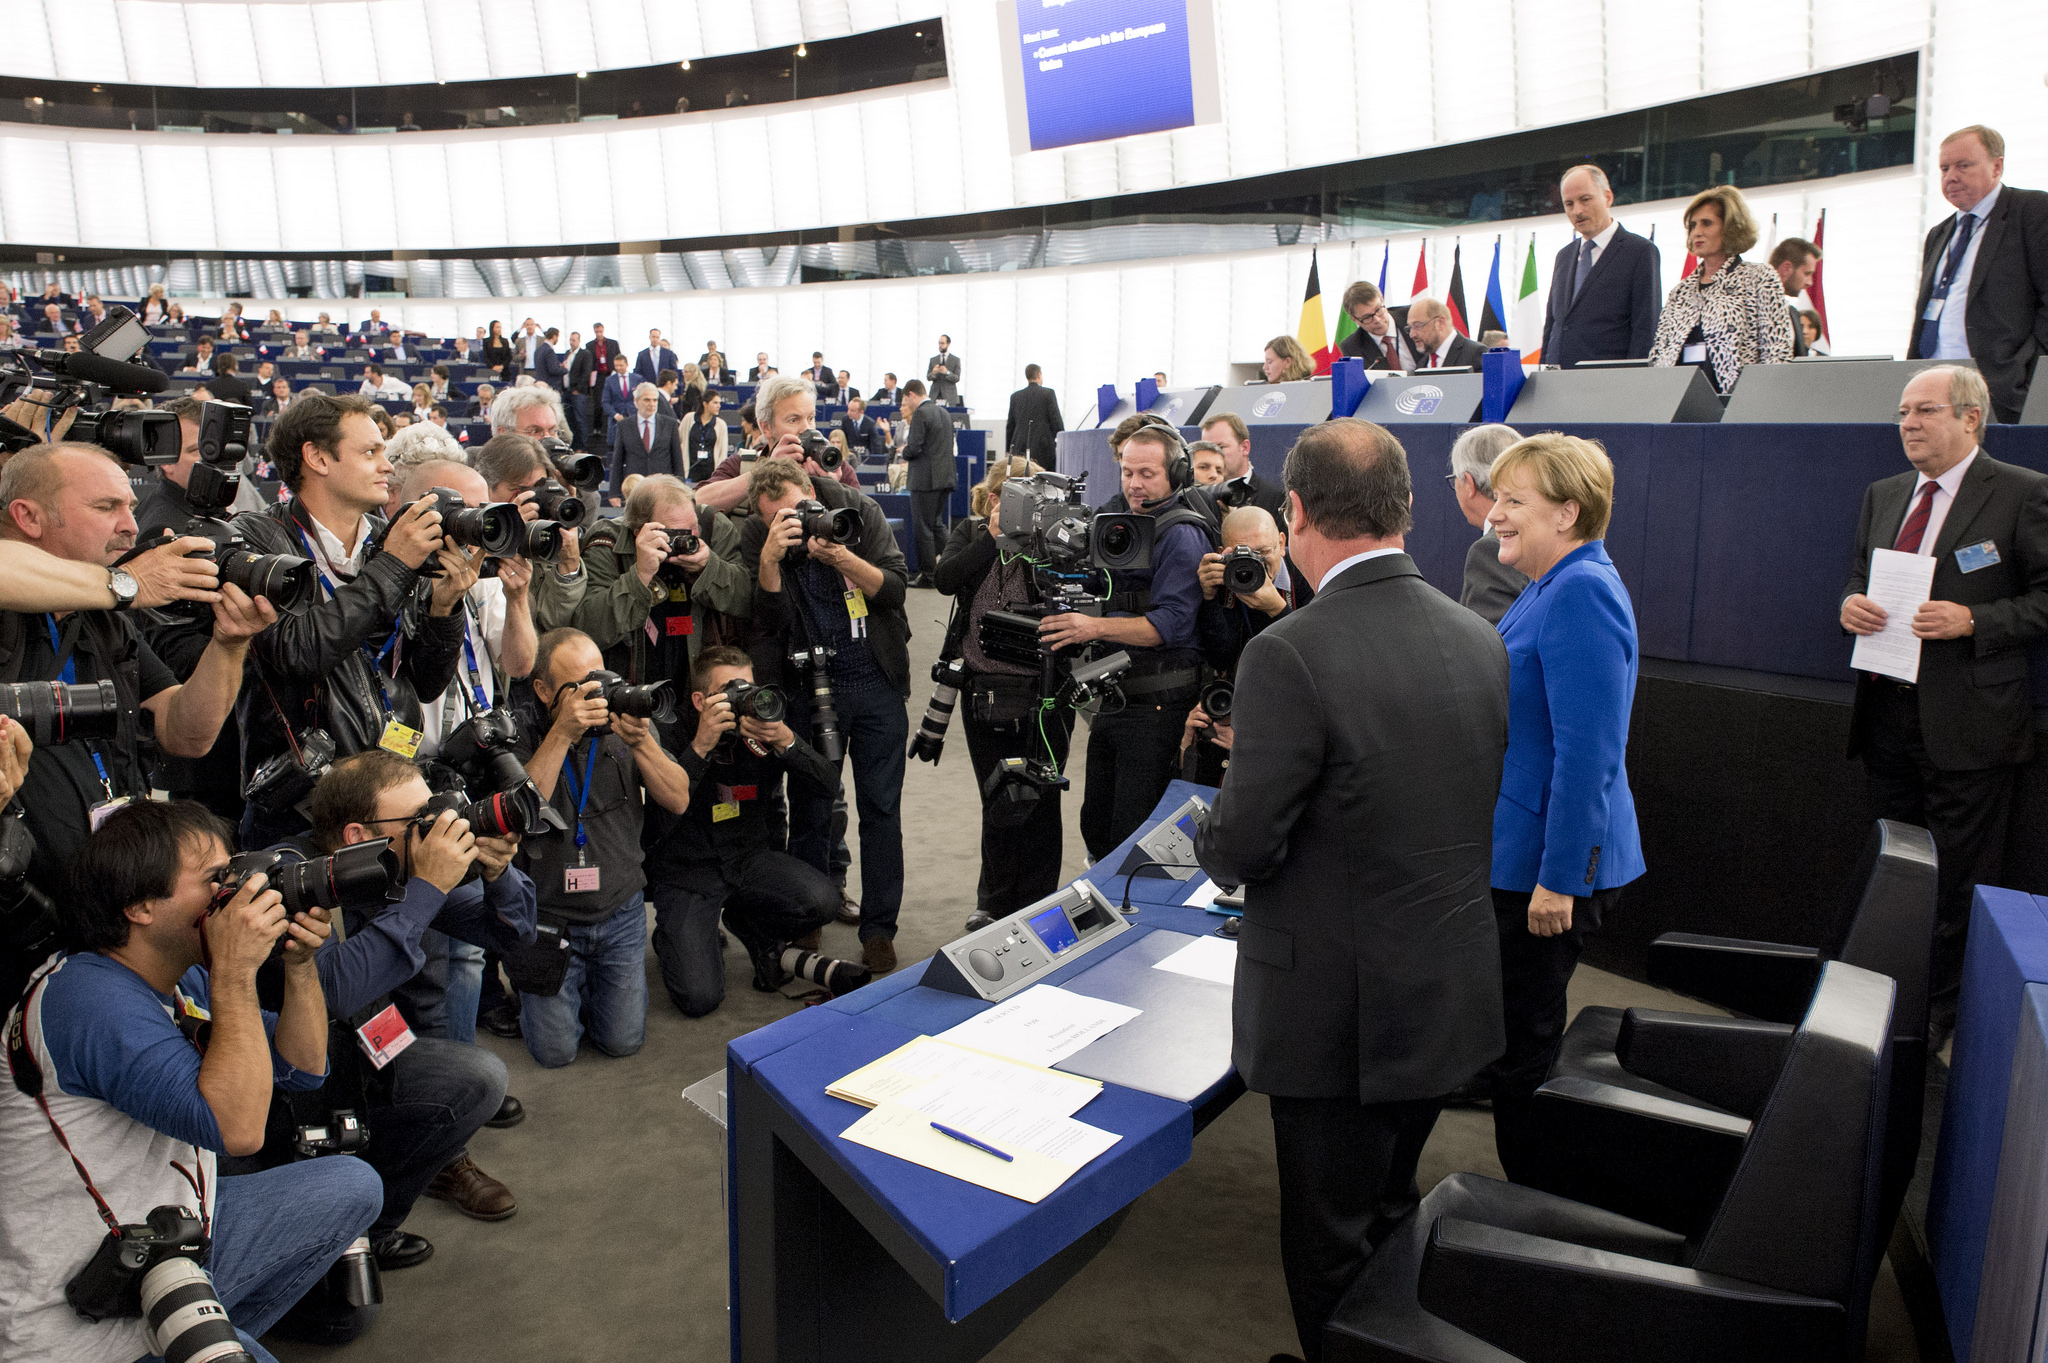 Angela Merkel with François Hollande in the European Union Parliament in 2015. Source: European Union